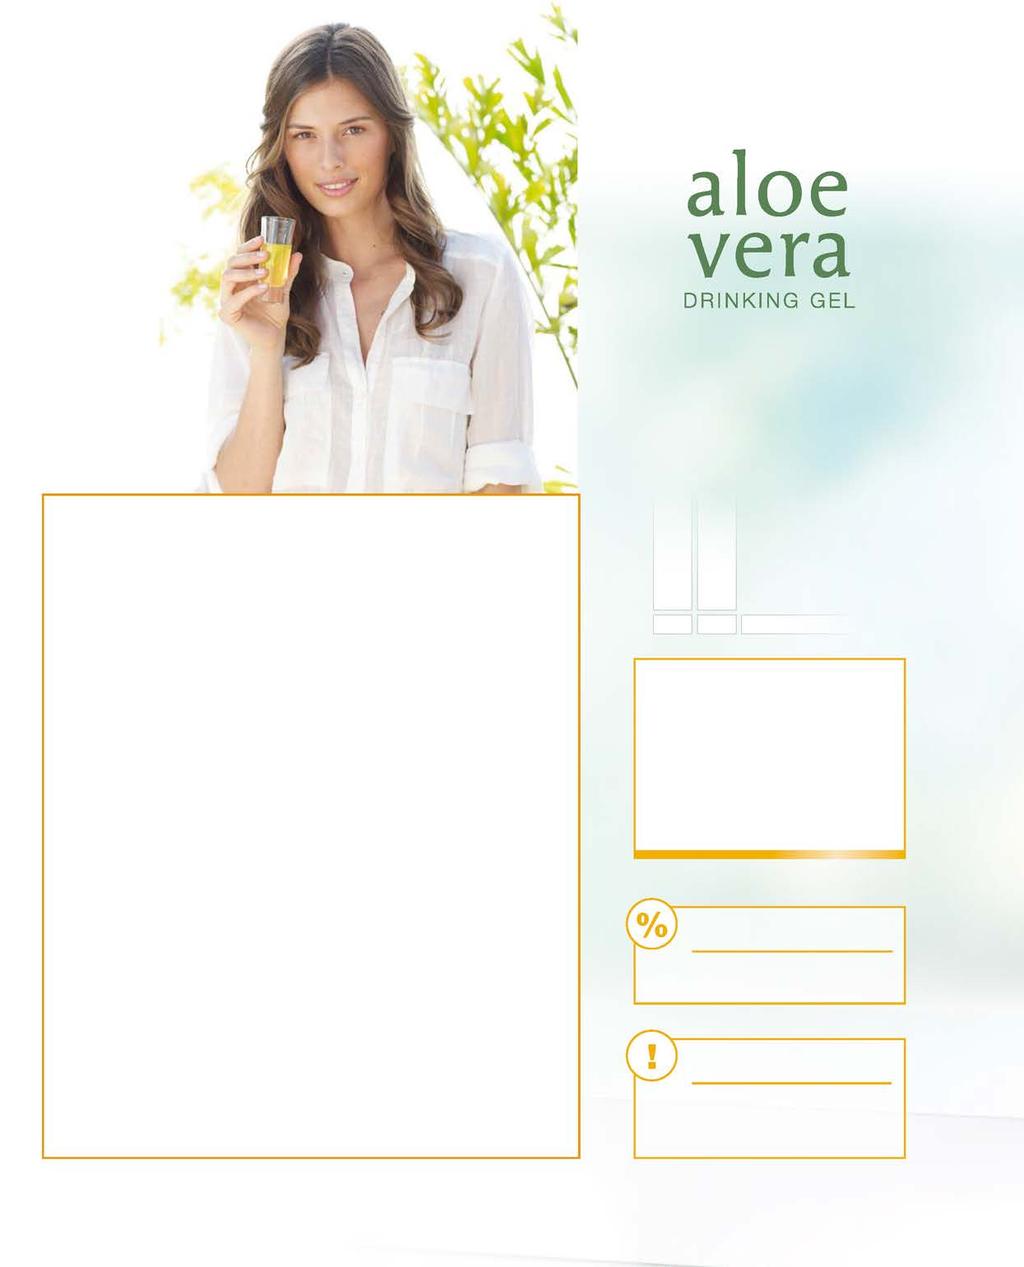 12 Aloe Vera Gel Μέλι Παράδοση στην Υγεία Δεν υπάρχει κανένα άλλο φυσικό προϊόν παγκοσμίως που να είναι τόσο επιτυχημένο και να φέρει παράλληλα μια παράδοση χιλιετιών όπως η Aloe Vera.